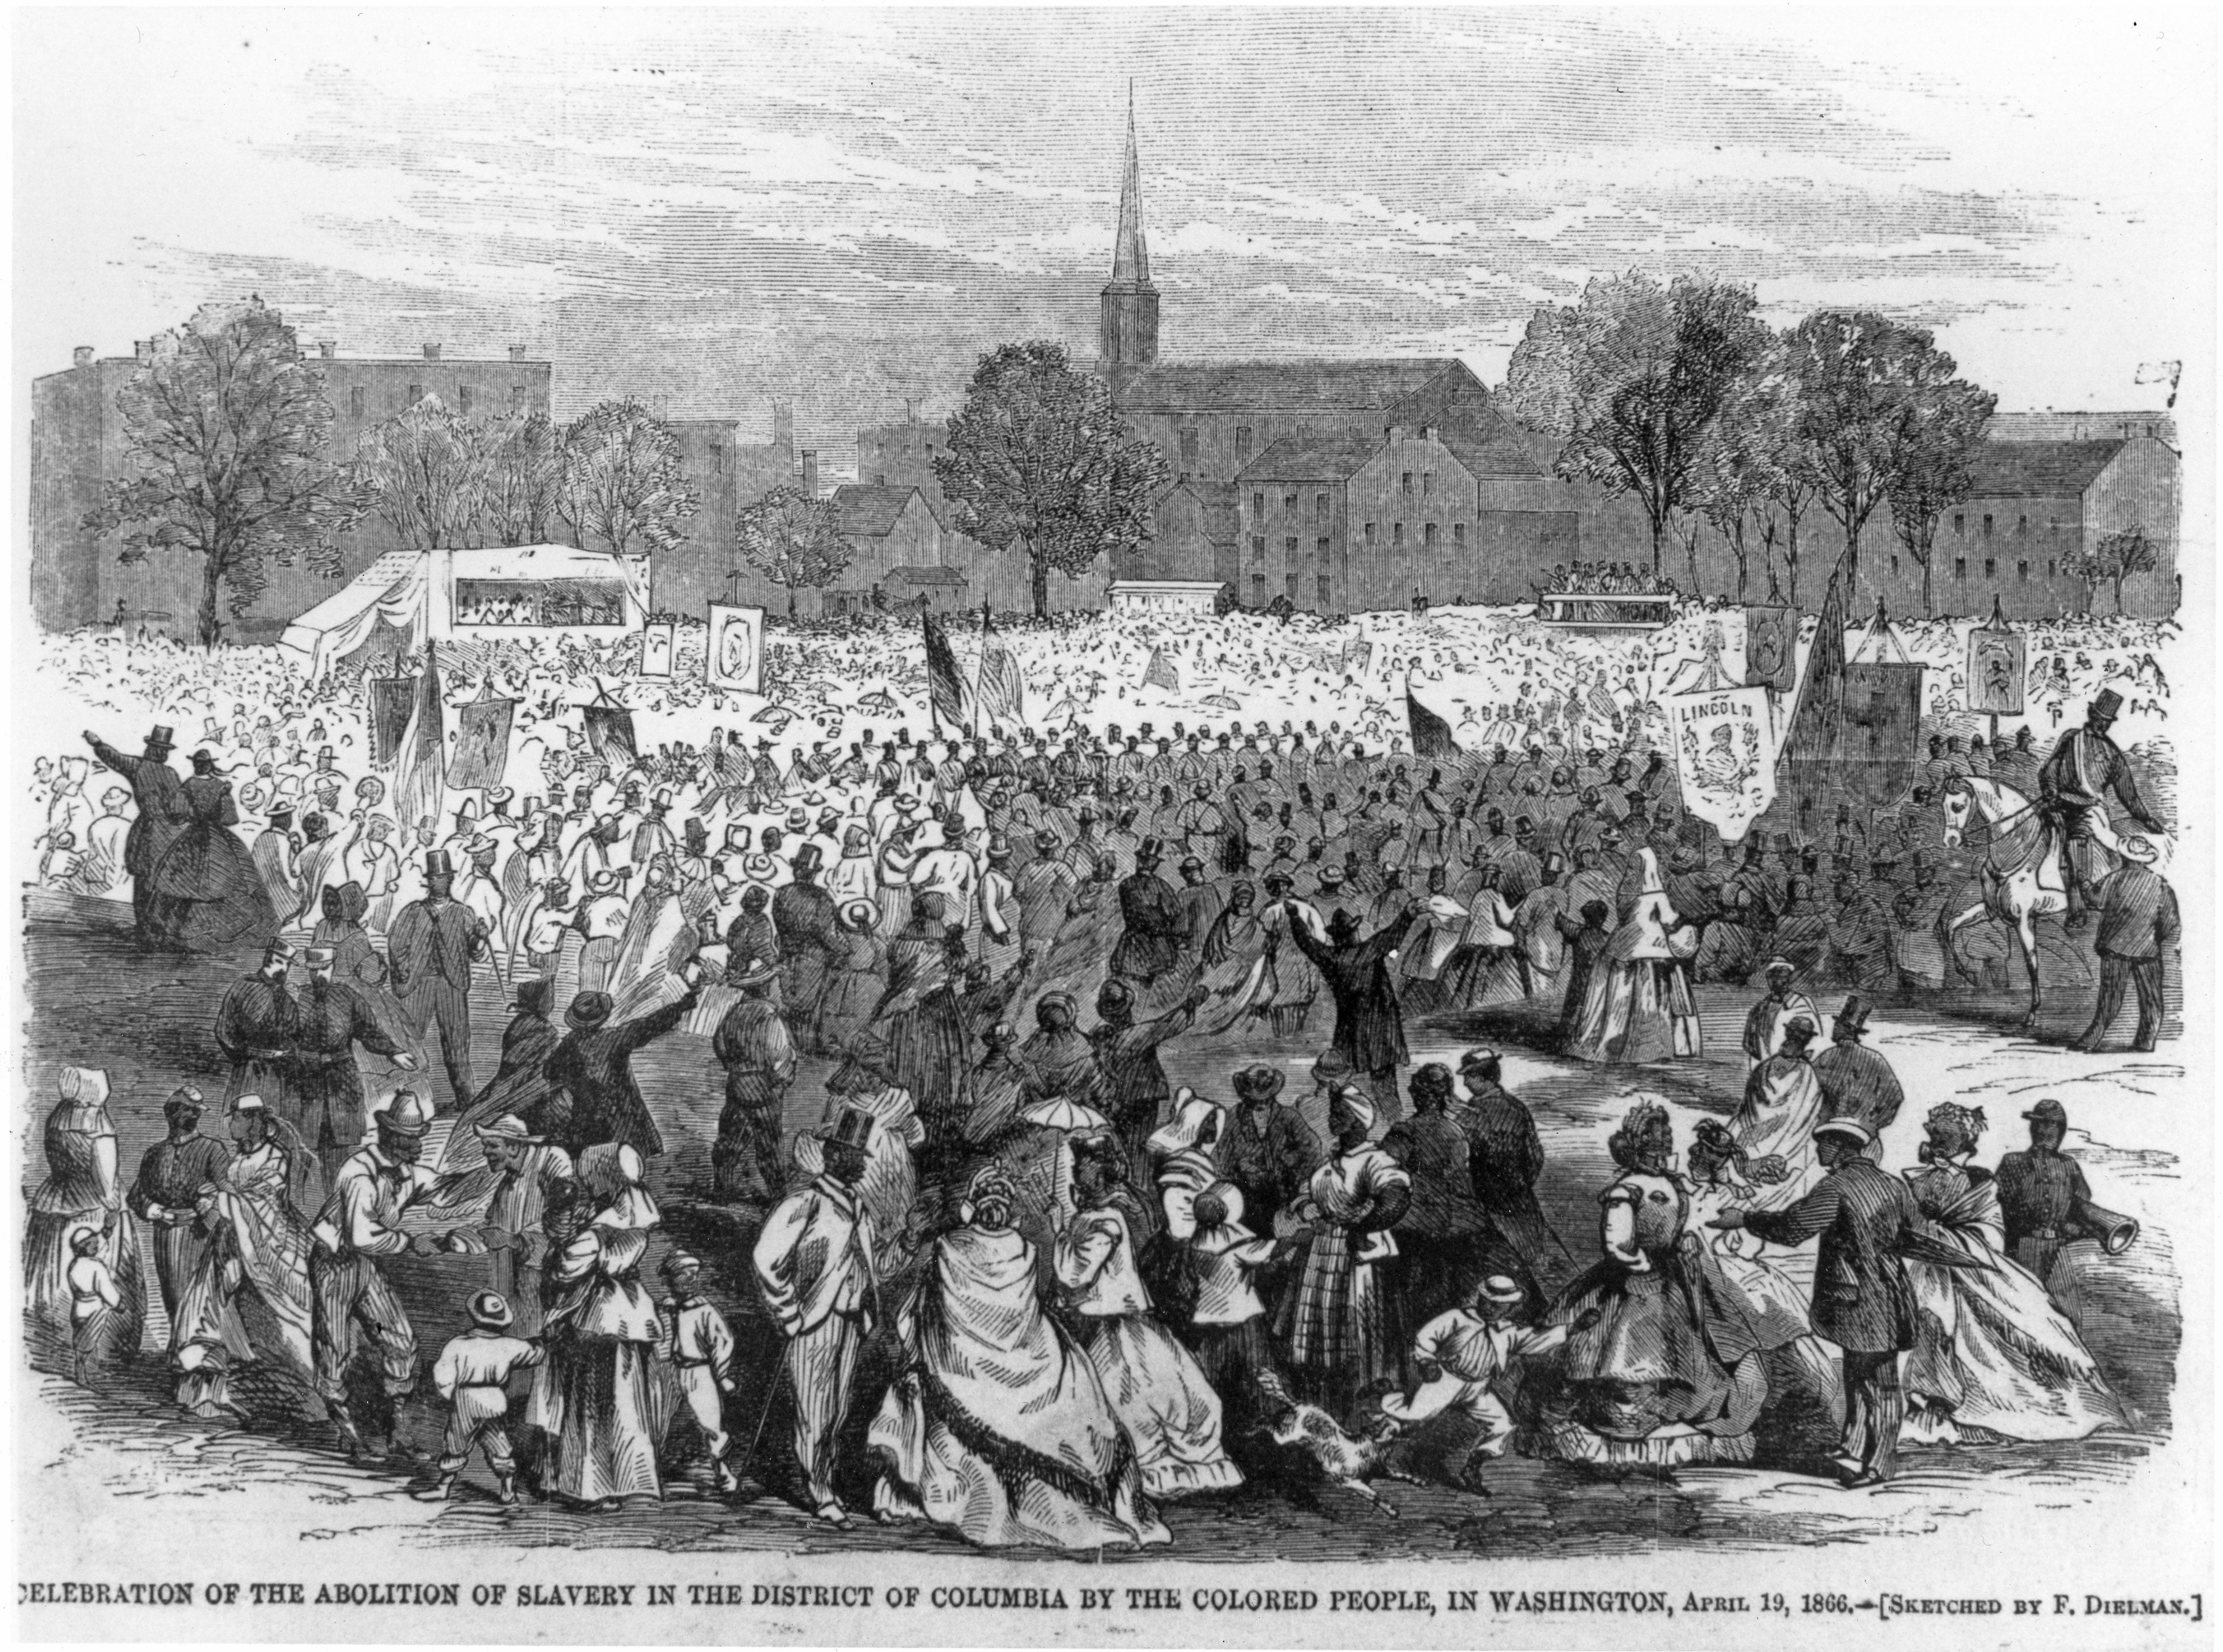 Aug 1 1834 Britain Passes Slavery Abolition Act Zinn Education Project